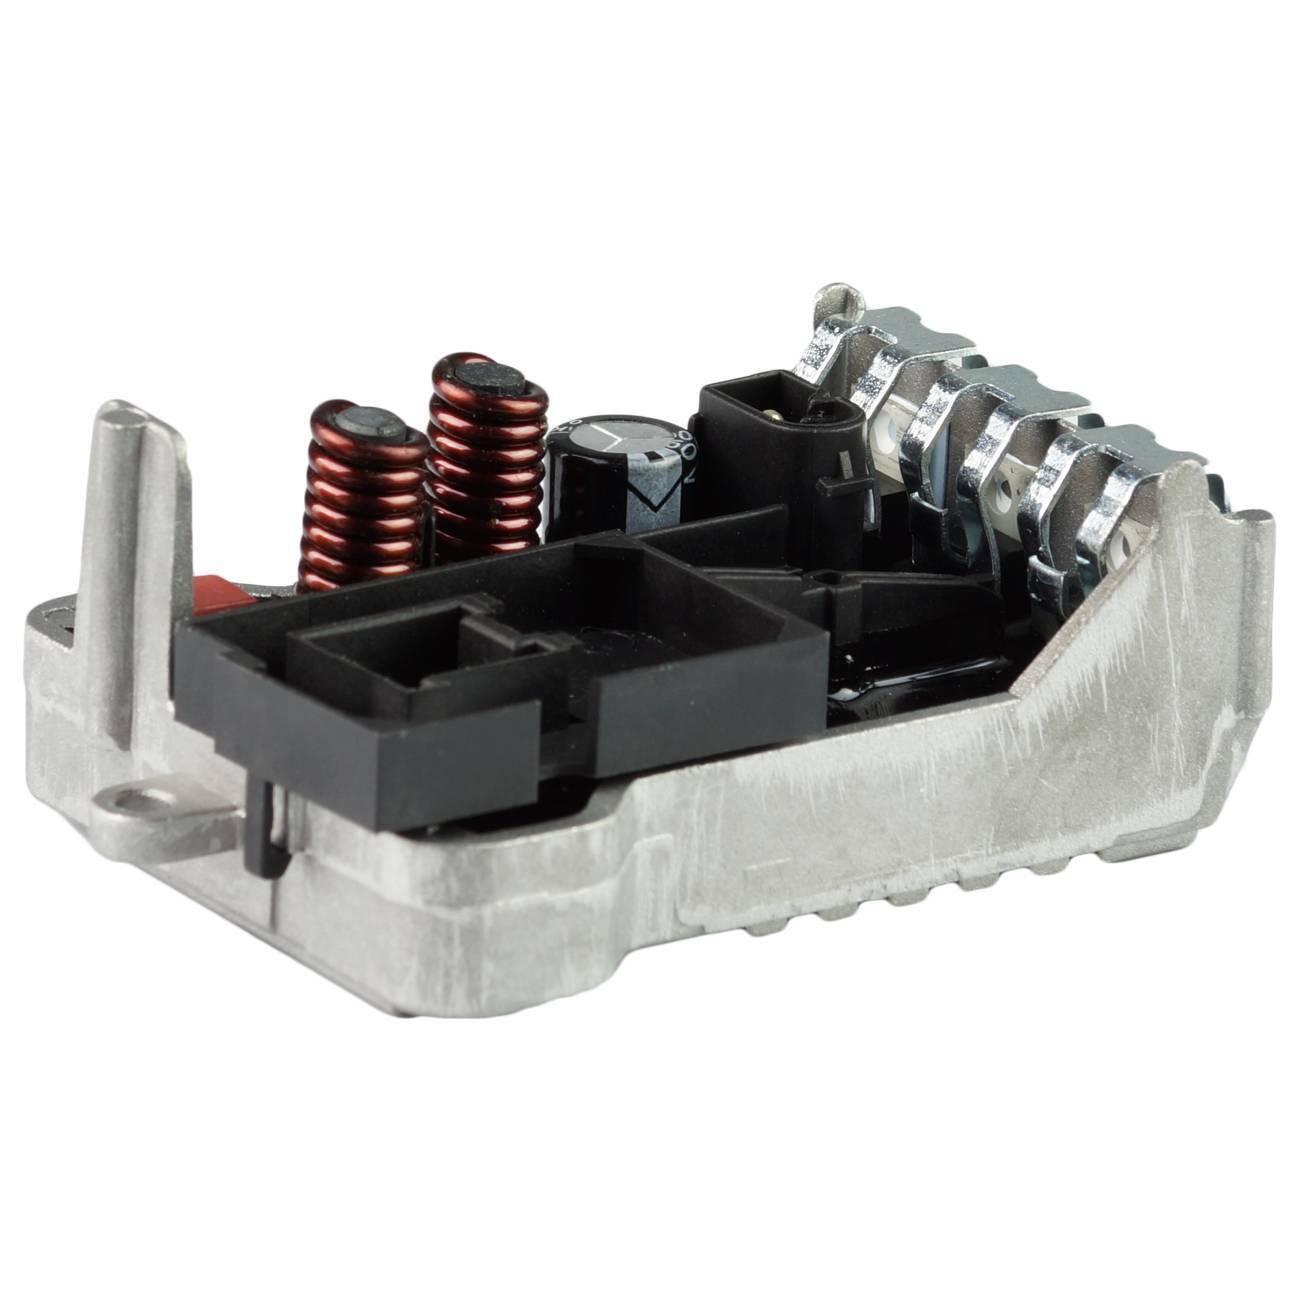 A/C Blower Motor Resistor for Mercedes R230 W203 S203 W220 W211 W220 W163 W463